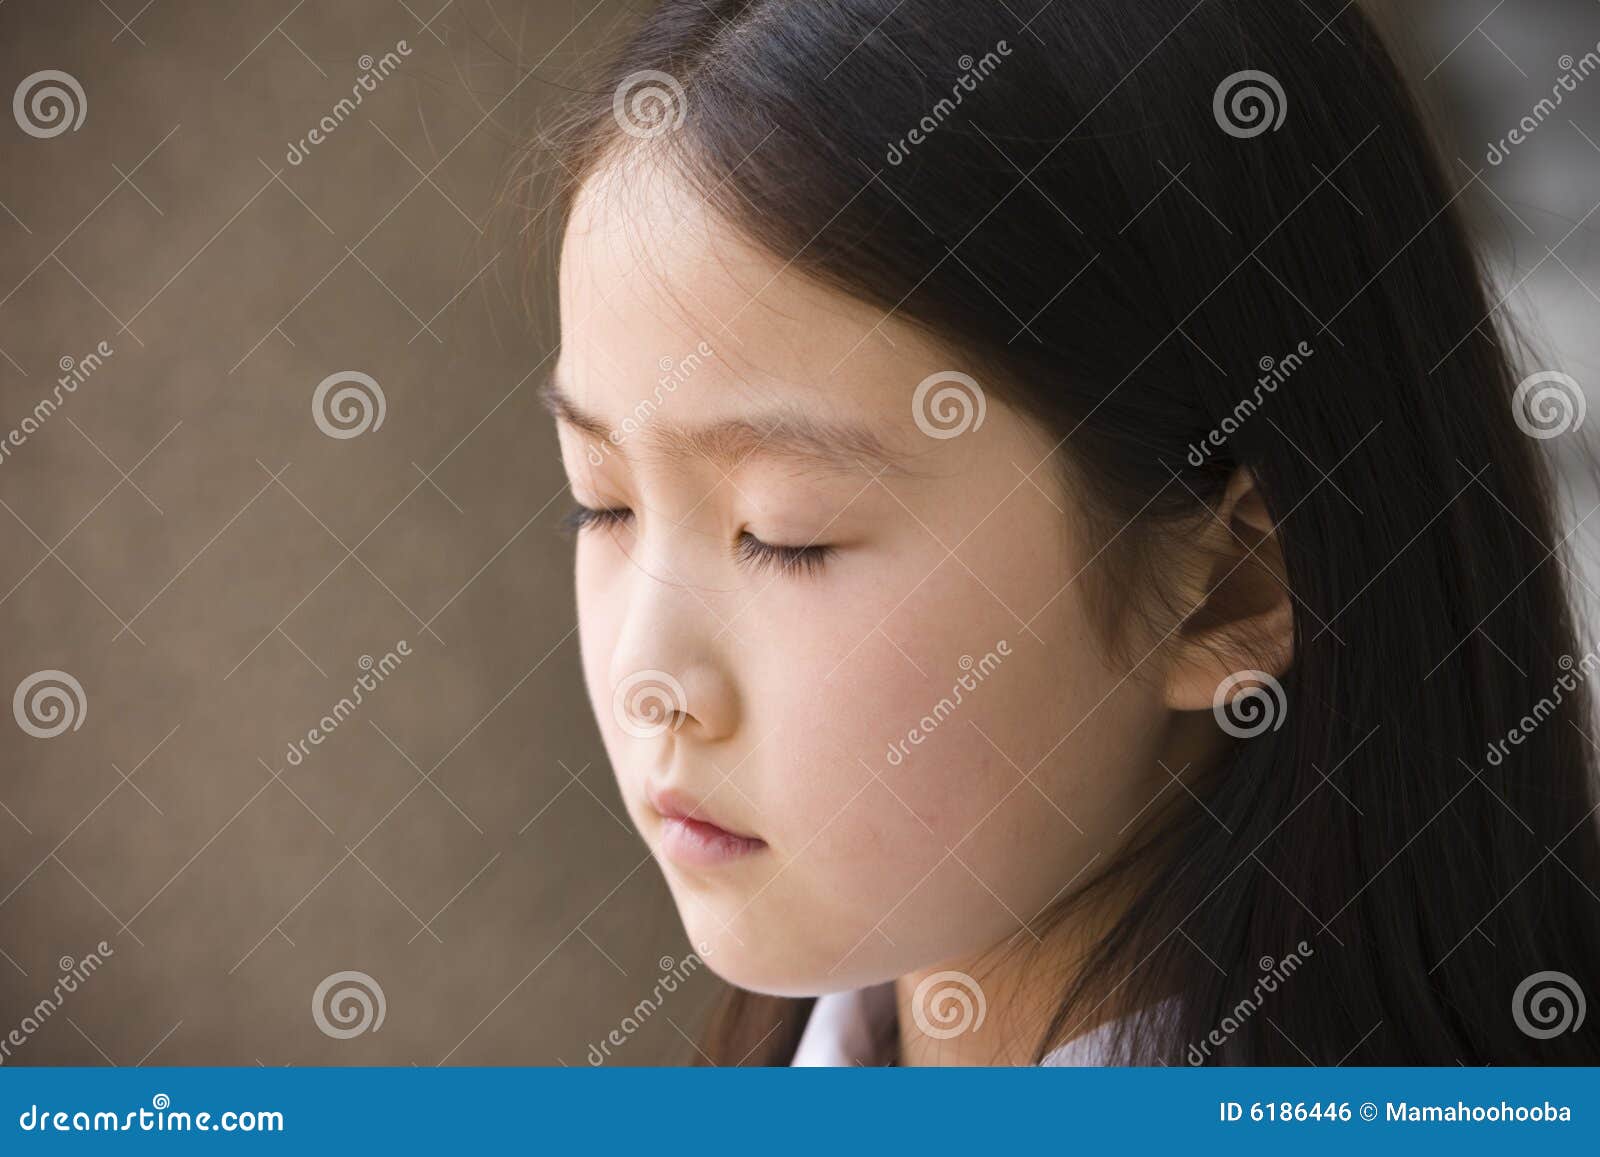 ary schoolgirl praying